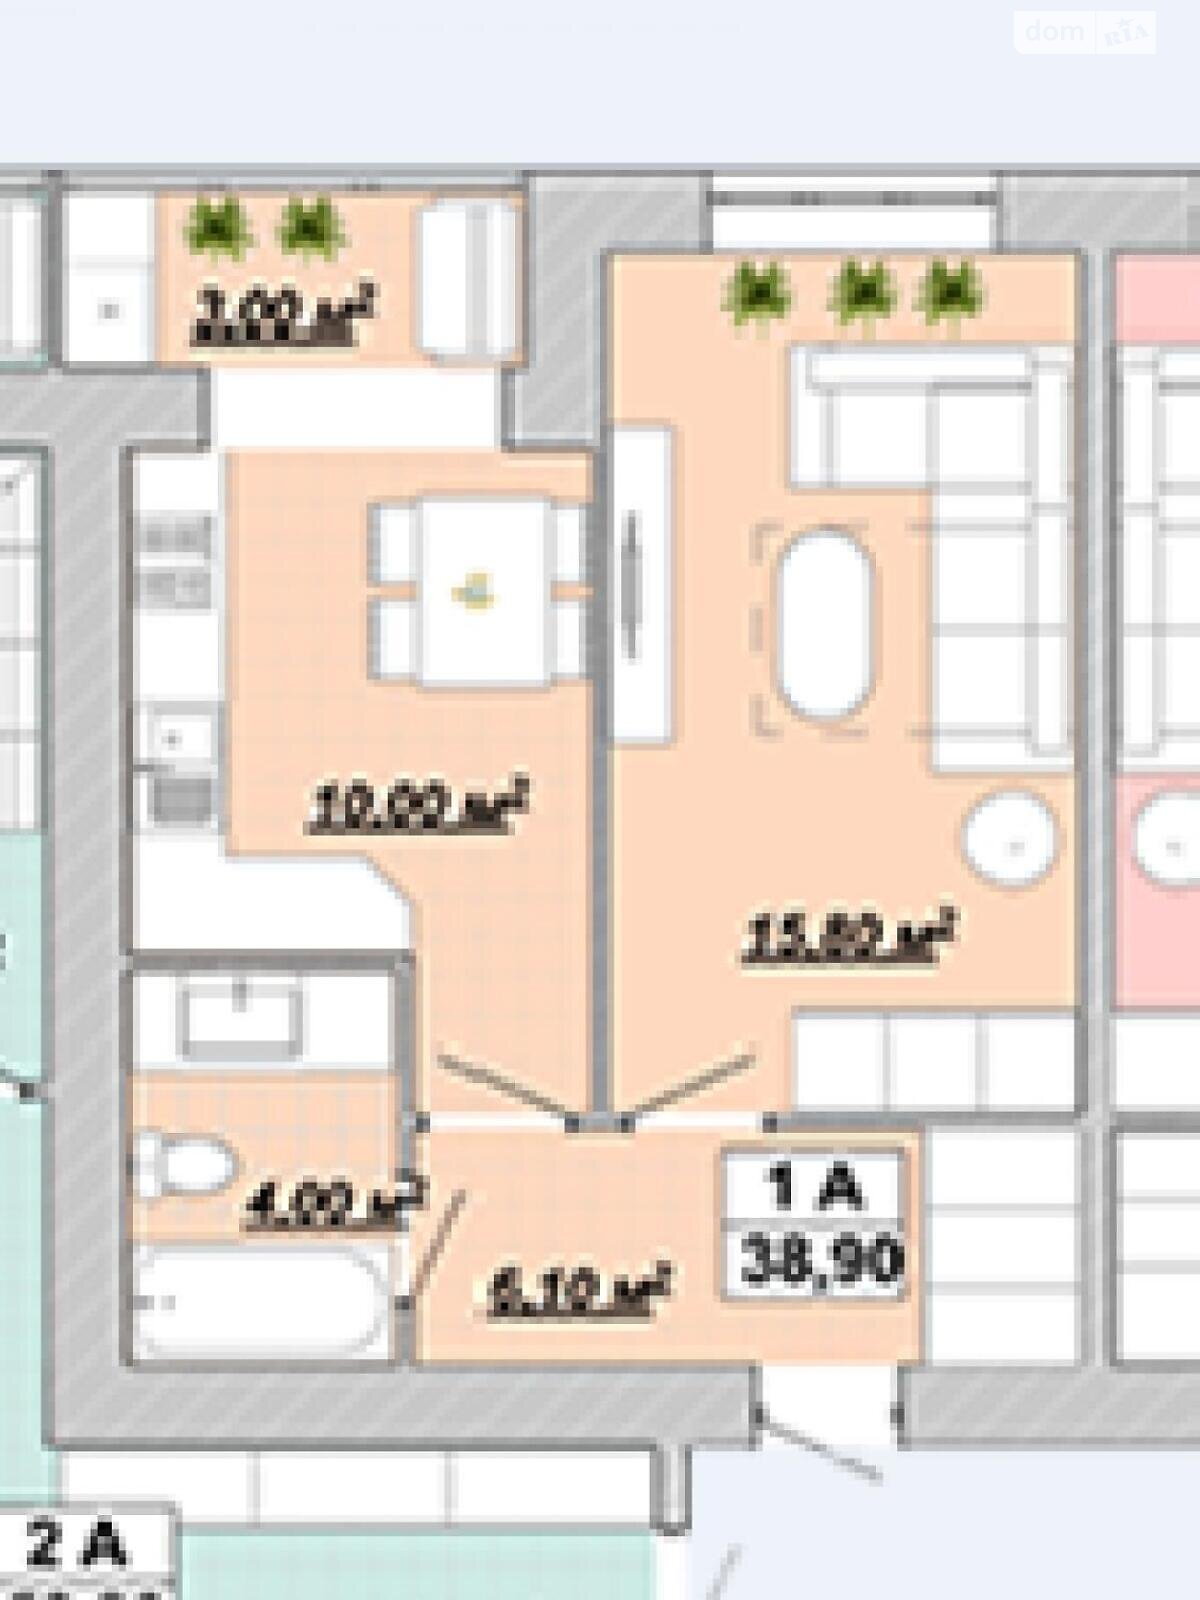 Продажа однокомнатной квартиры в Ивано-Франковске, на ул. Княгинин, район Центр фото 1